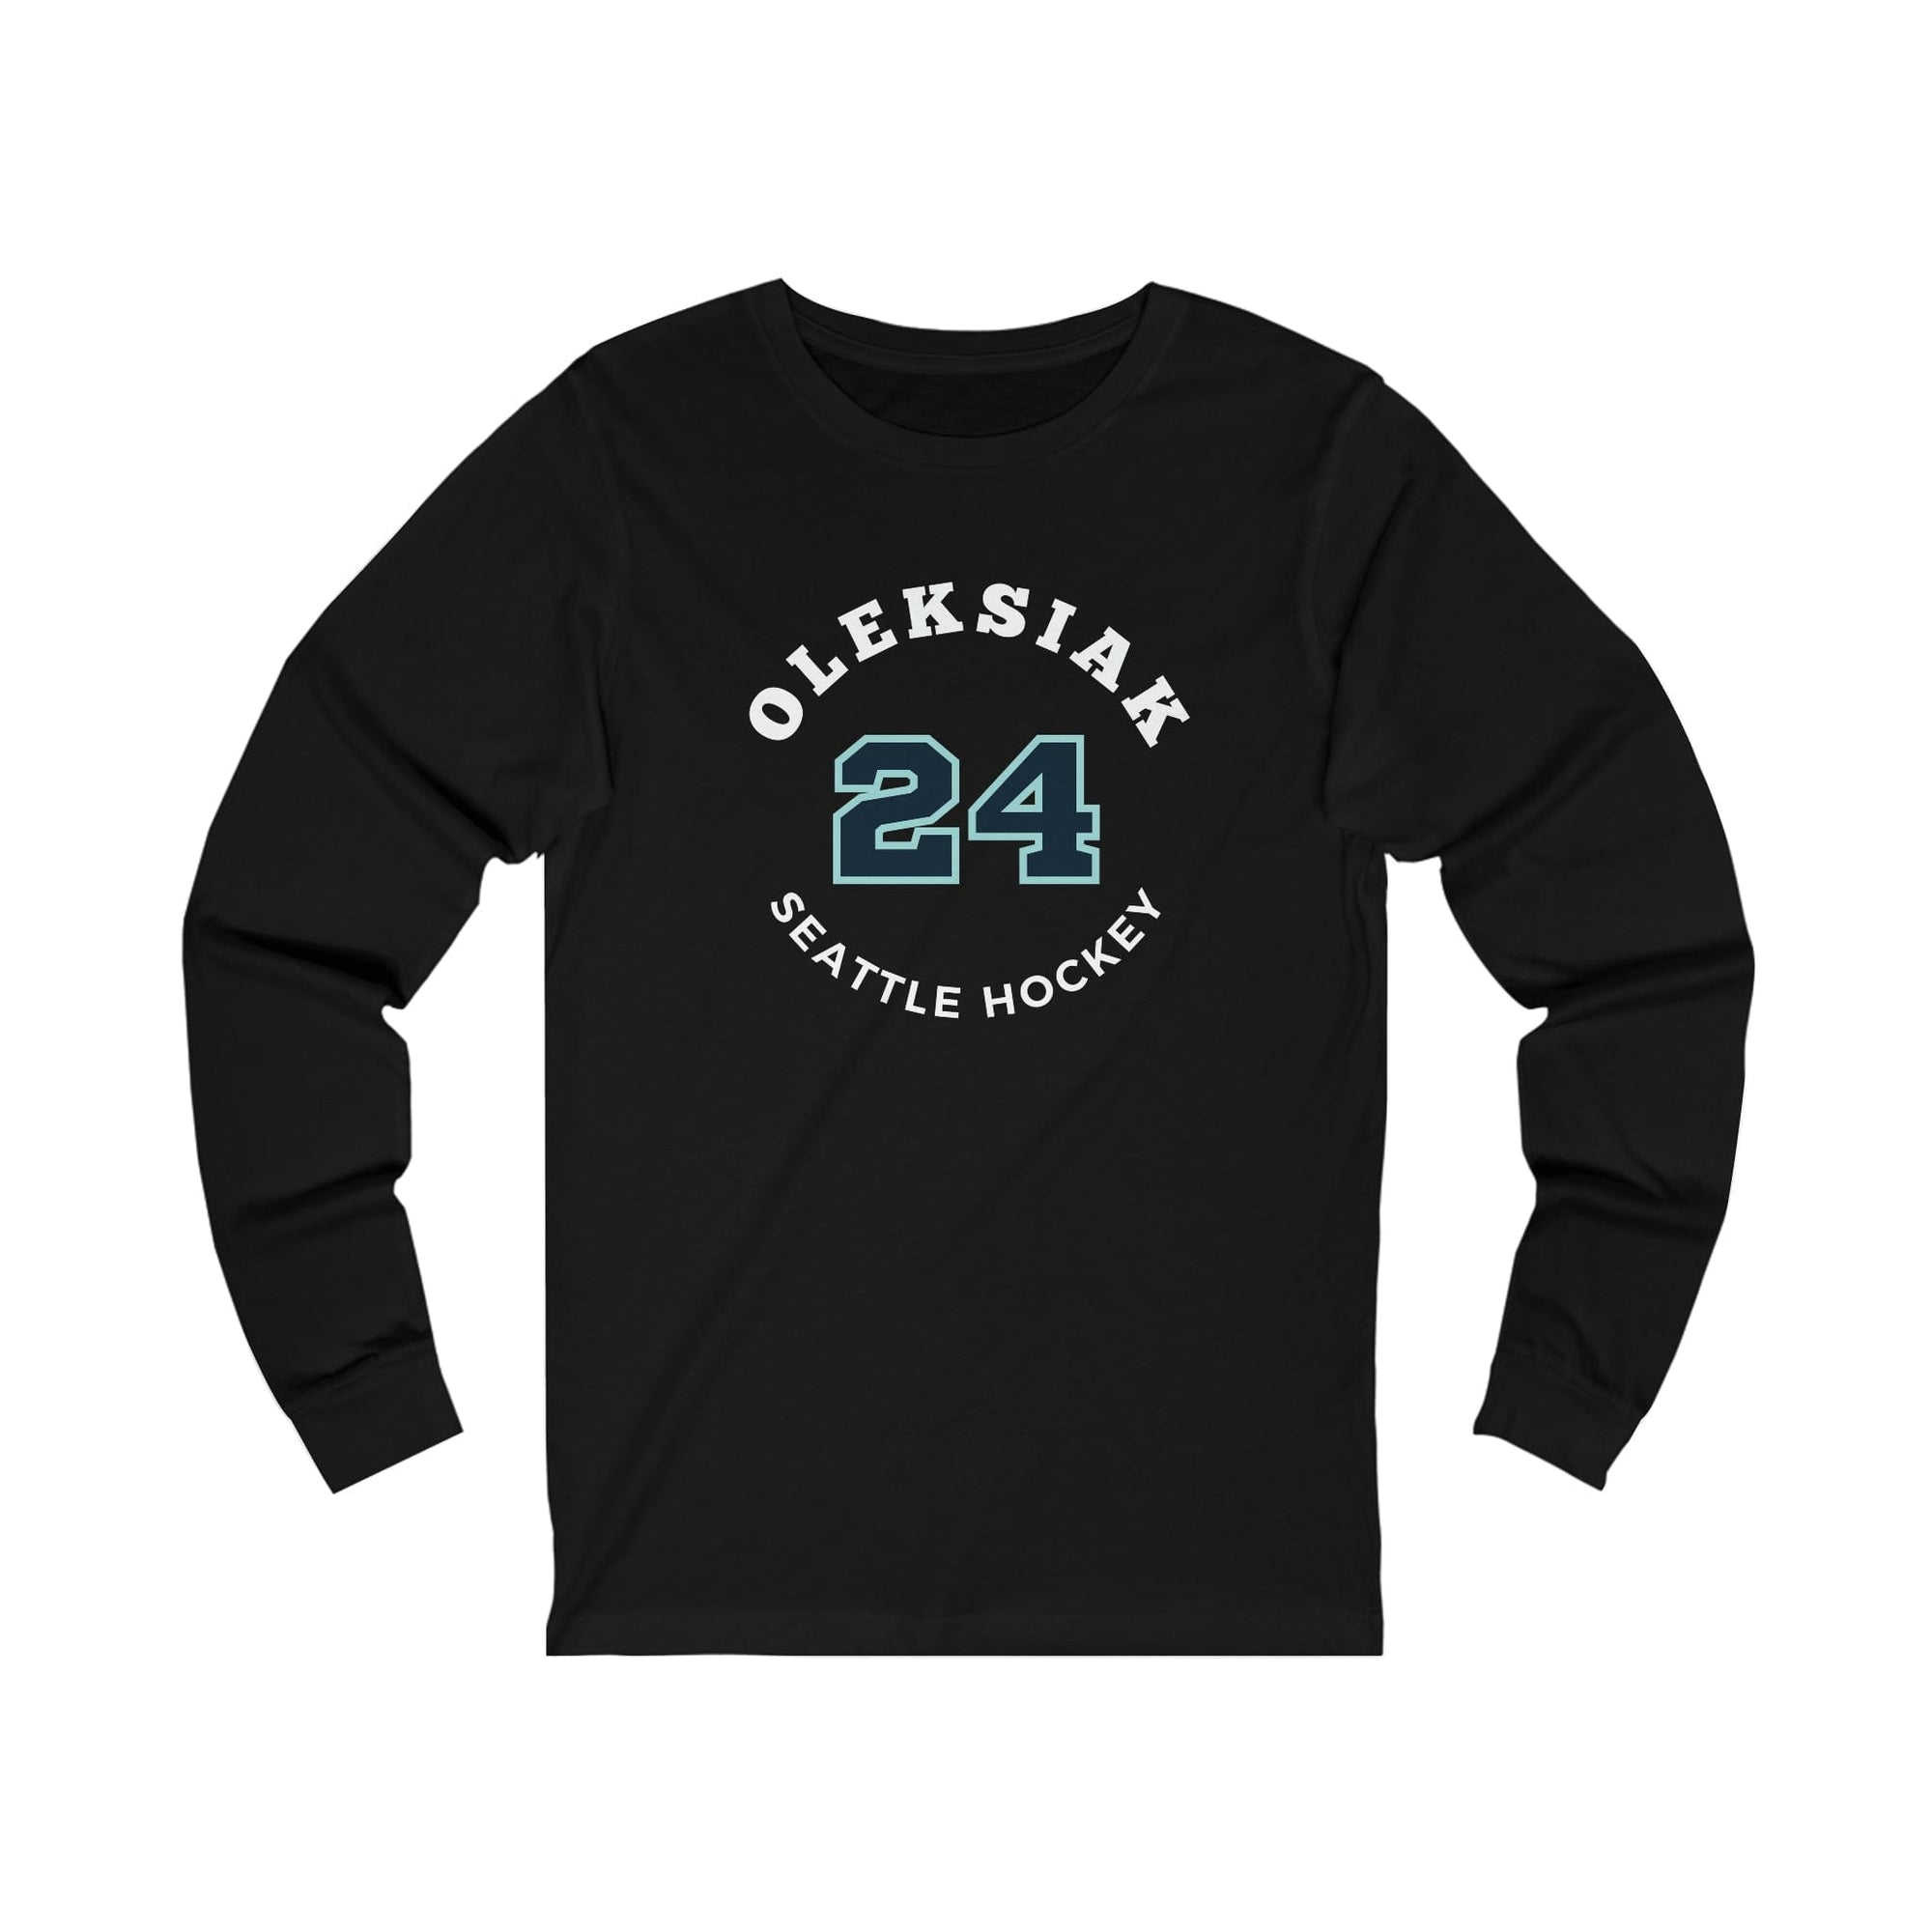 Long-sleeve Oleksiak 24 Seattle Hockey Number Arch Design Unisex Jersey Long Sleeve Shirt